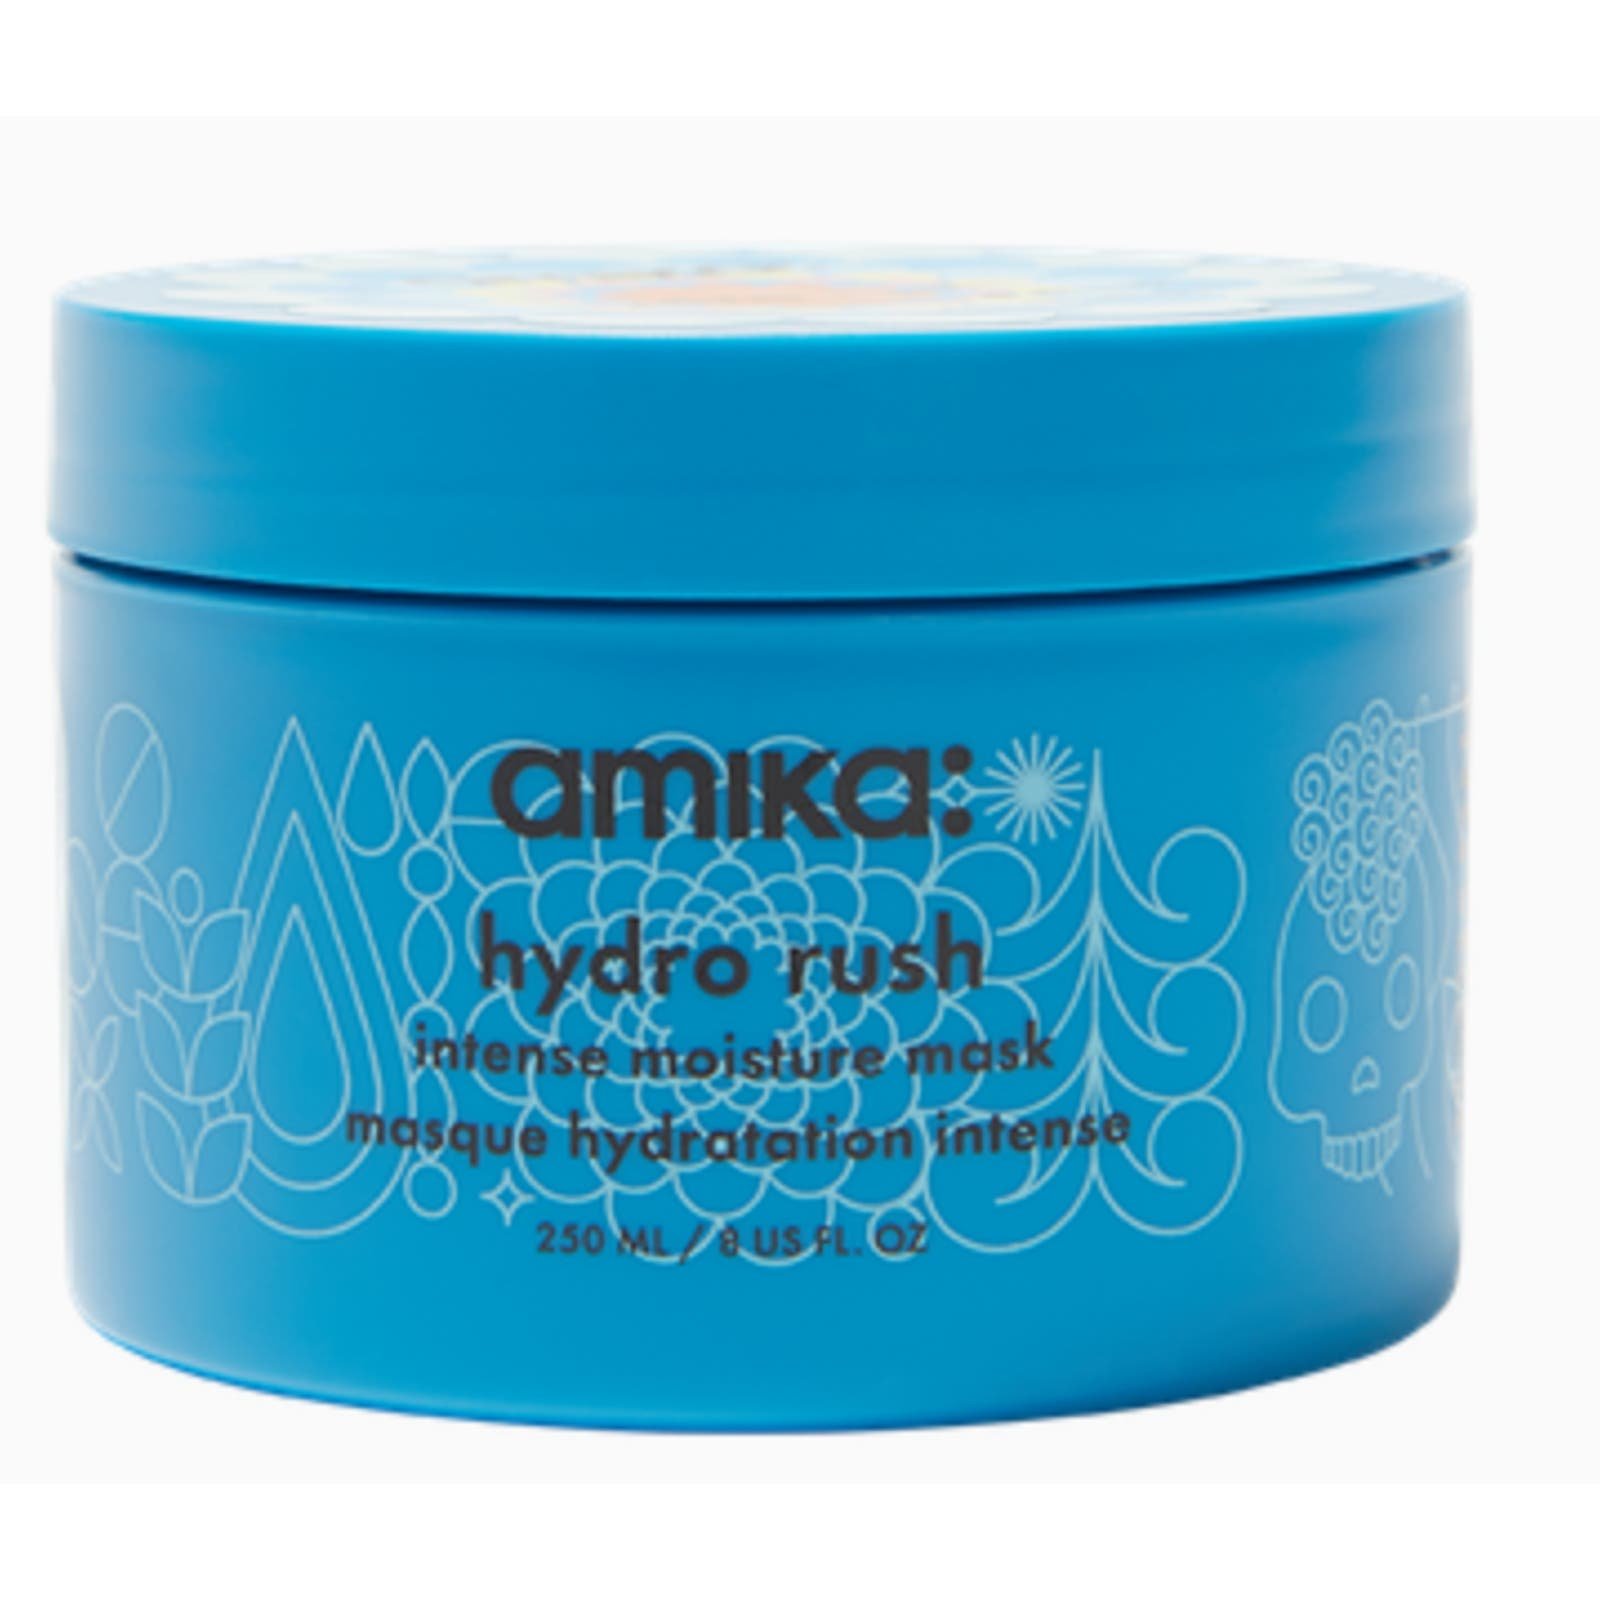 Amika Hydro Rush Intense Moisture Hair Mask with Hyaluronic Acid - 8 oz NEW ELKYrqYfV